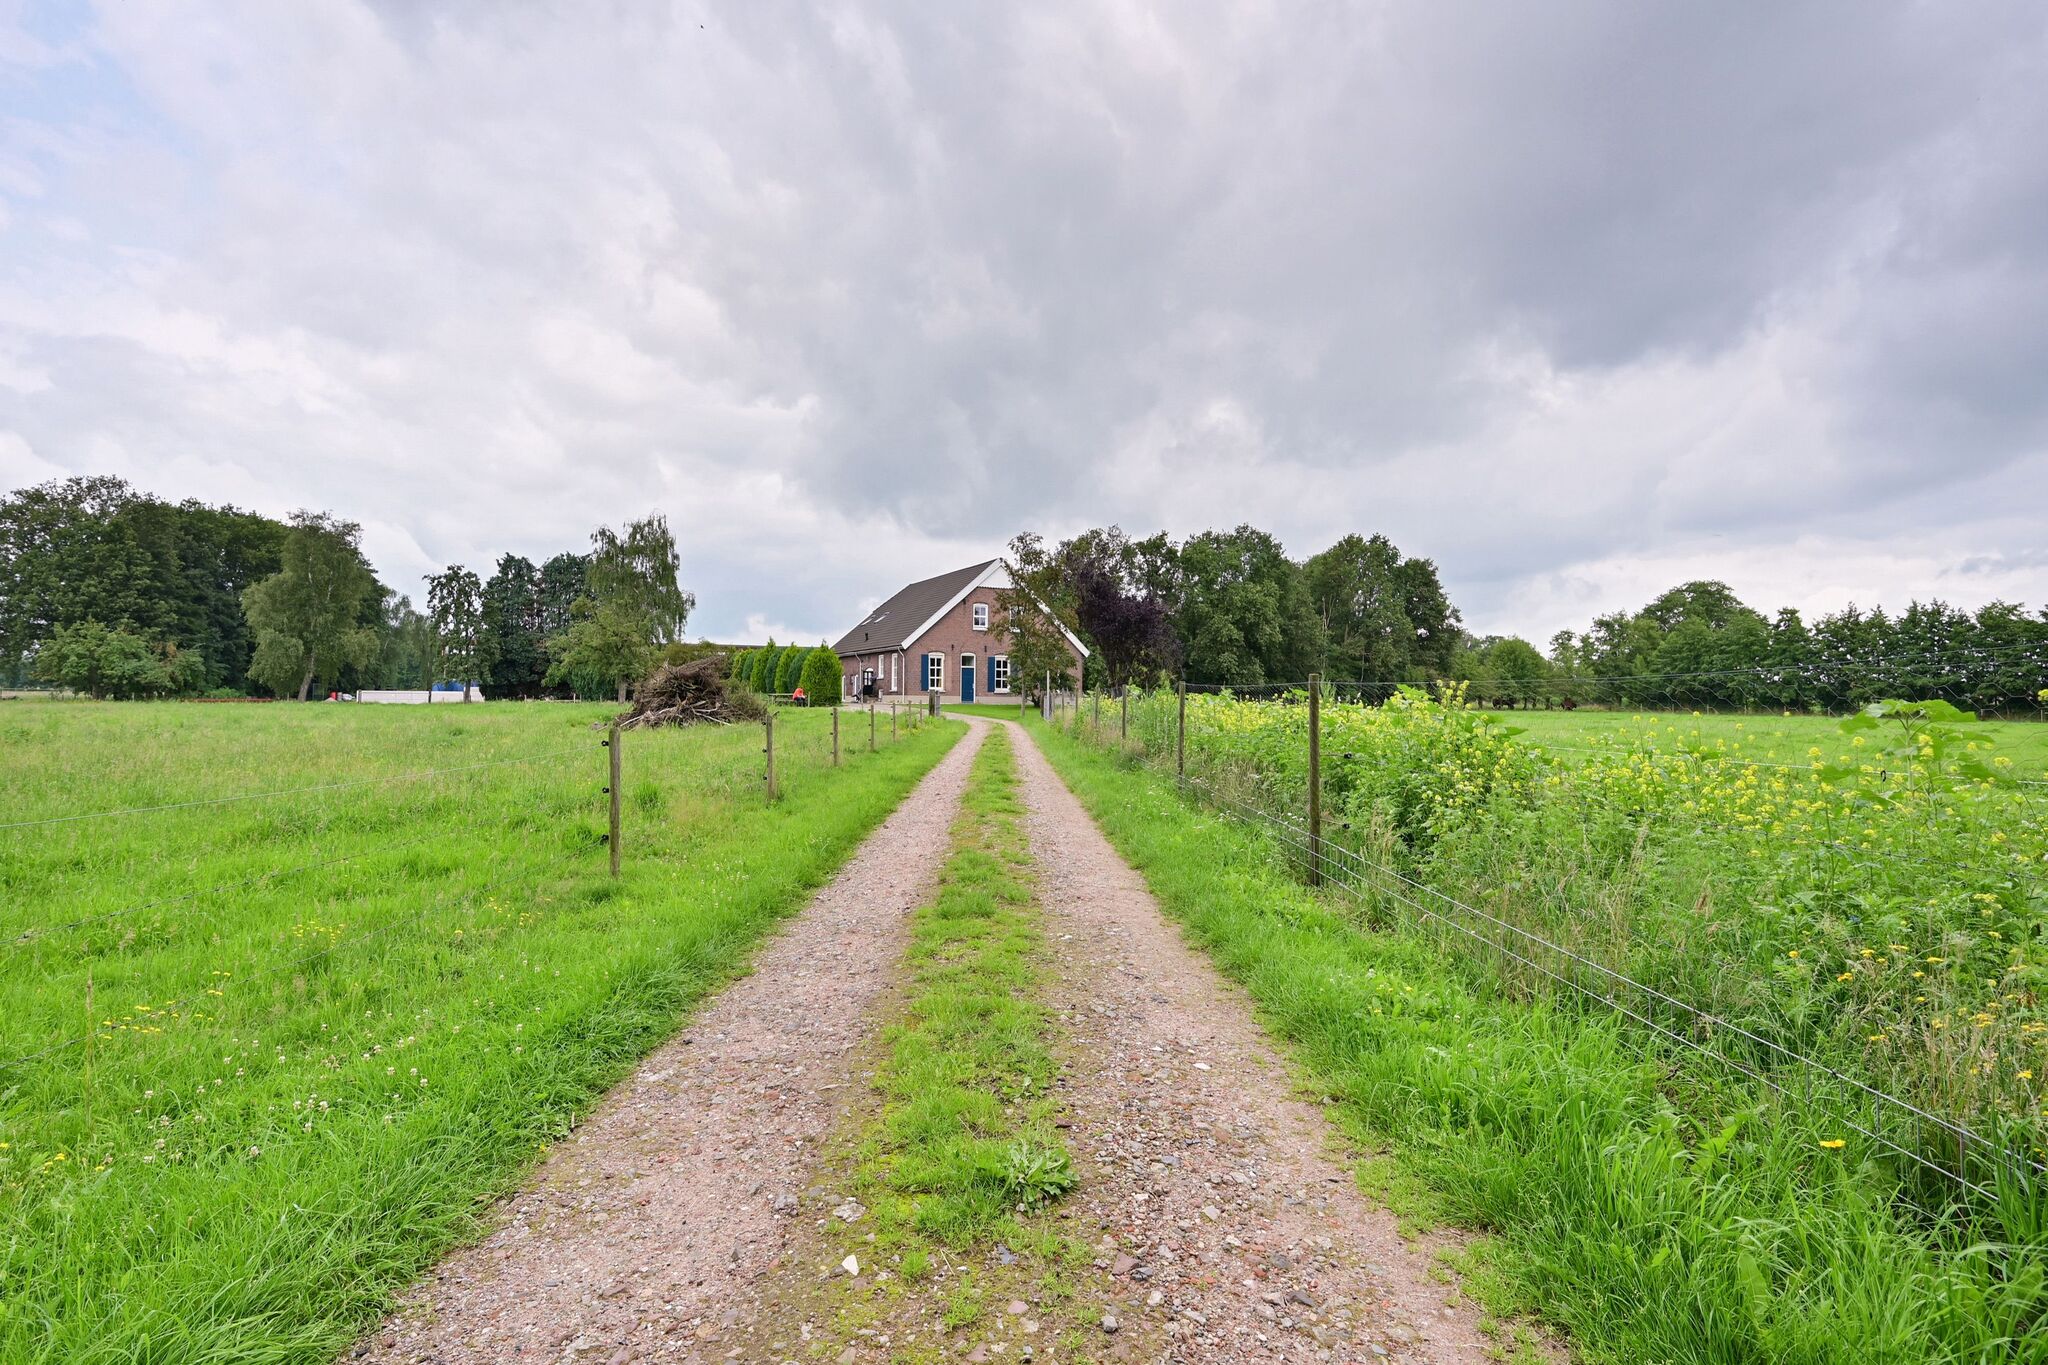 Farmhouse in De Heurne near the forest